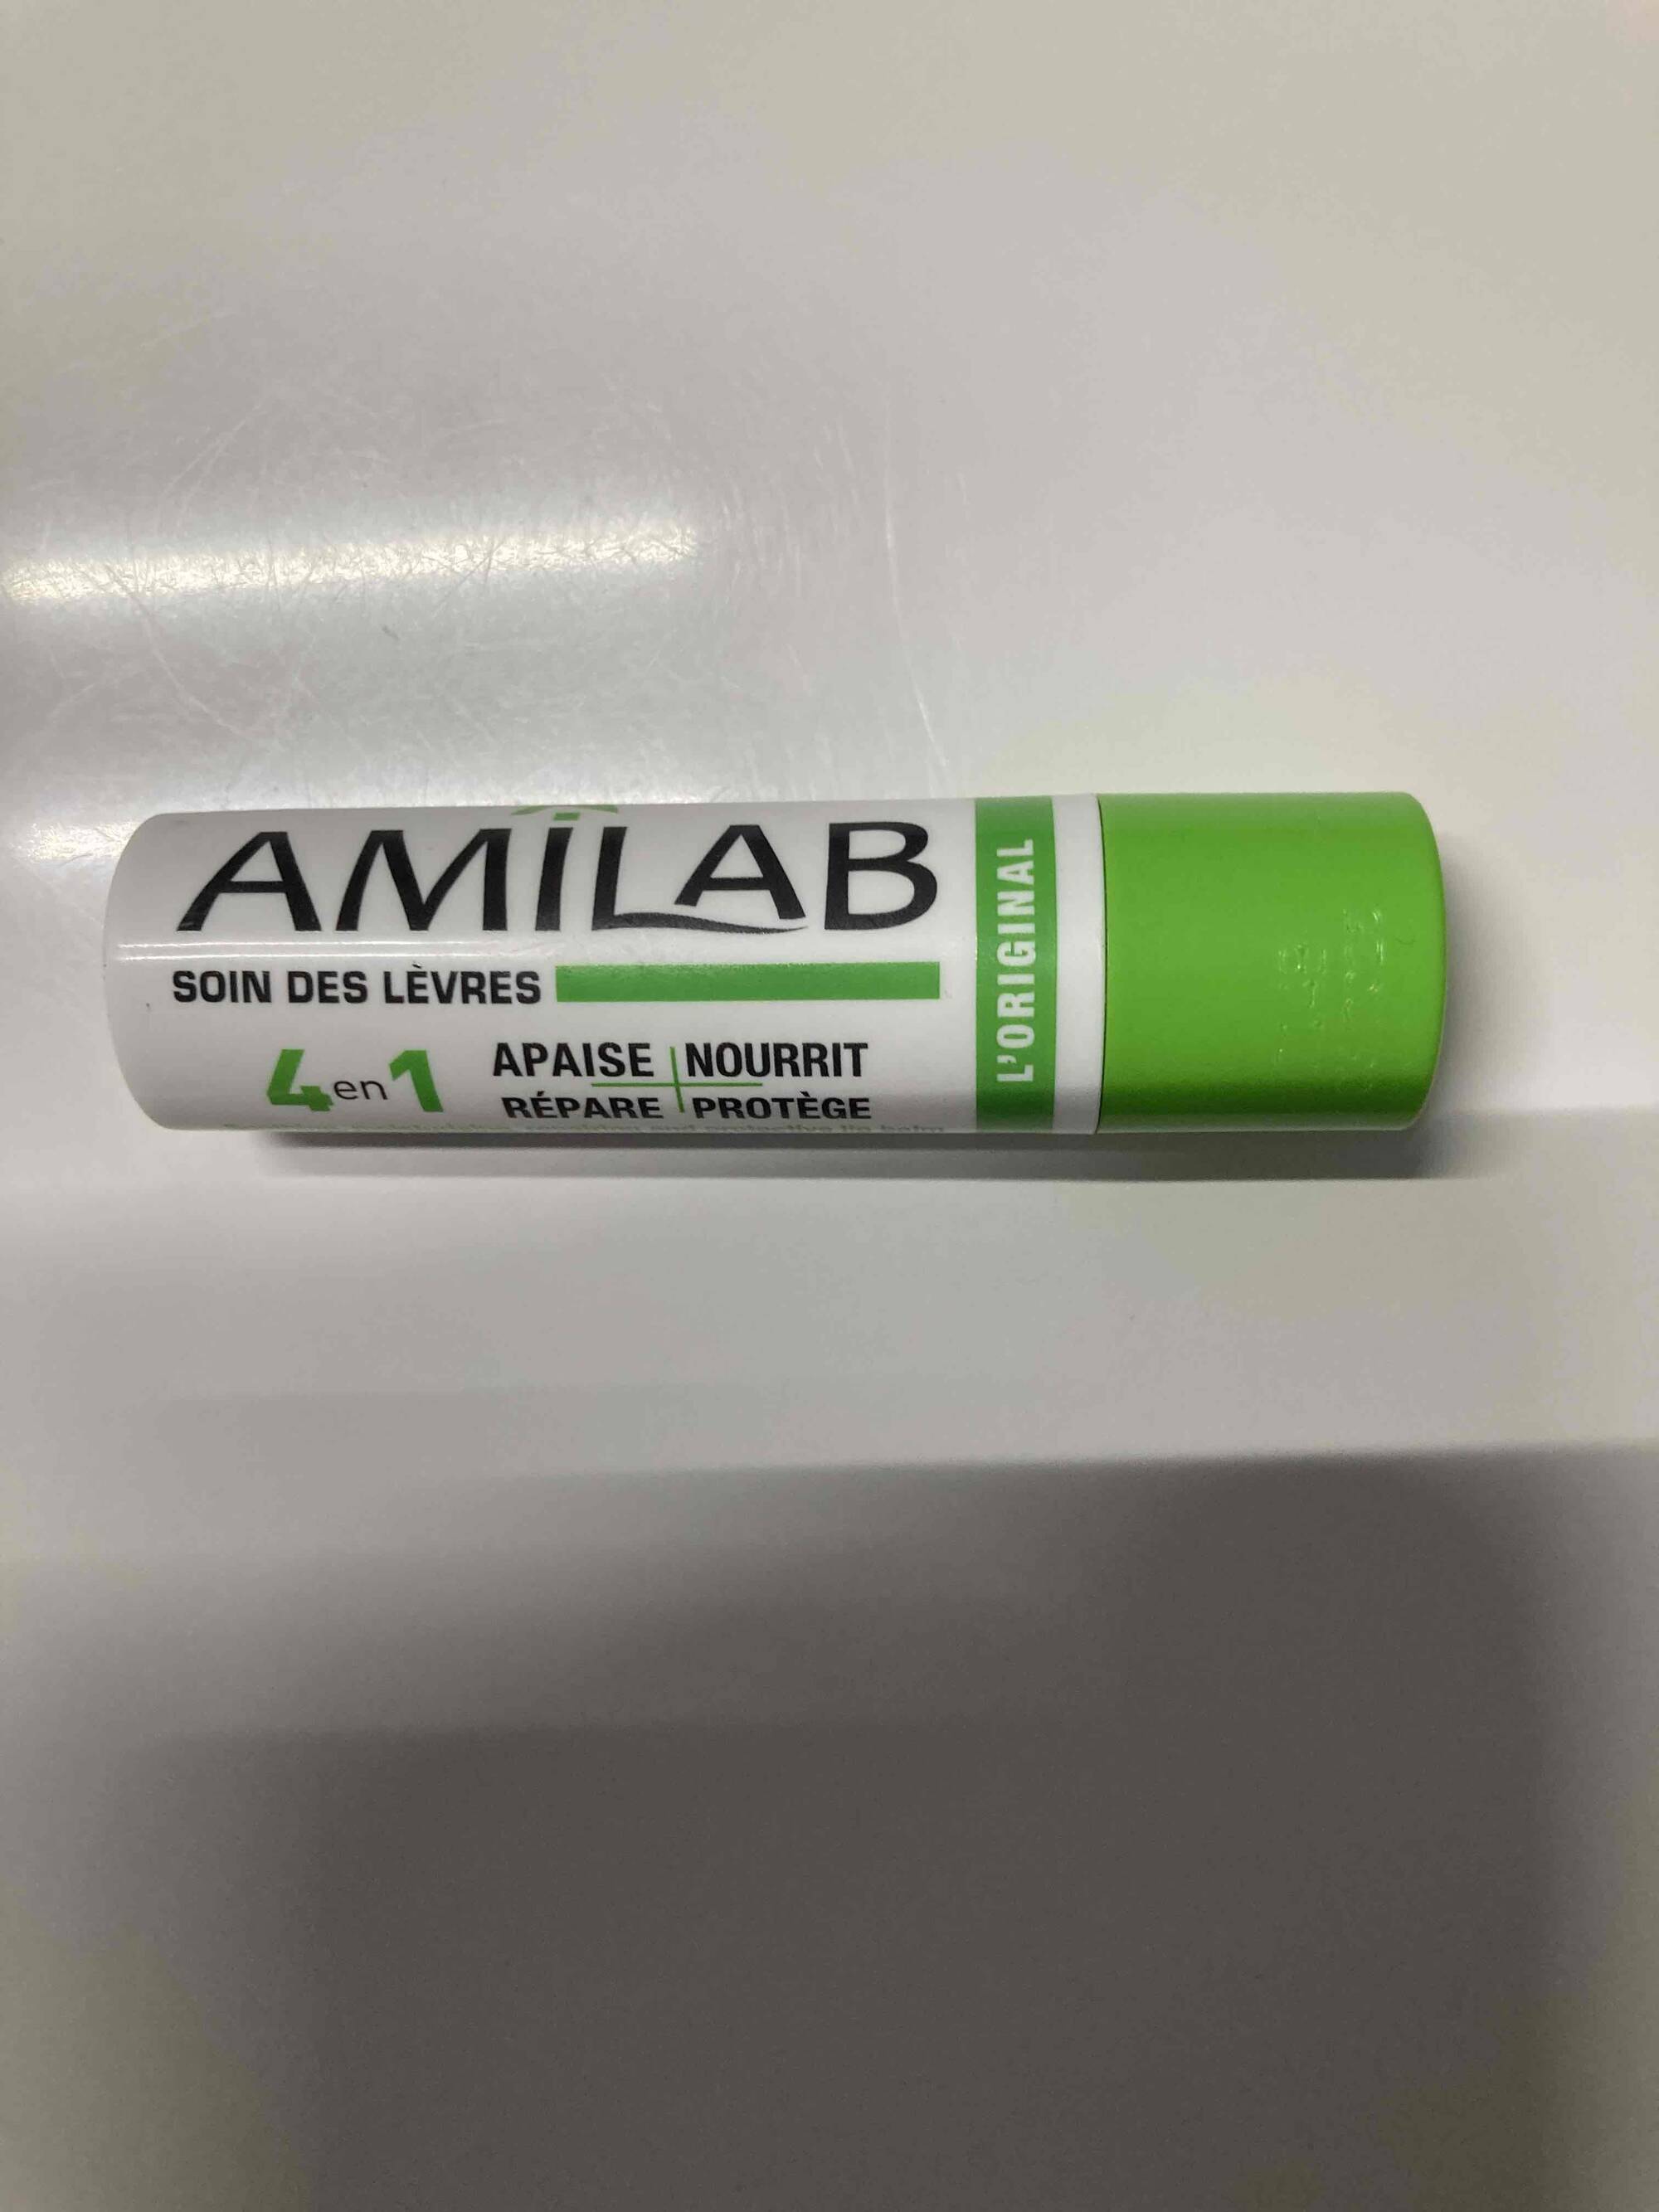 AMILAB - L'original - Soin des lèvres 4 en 1